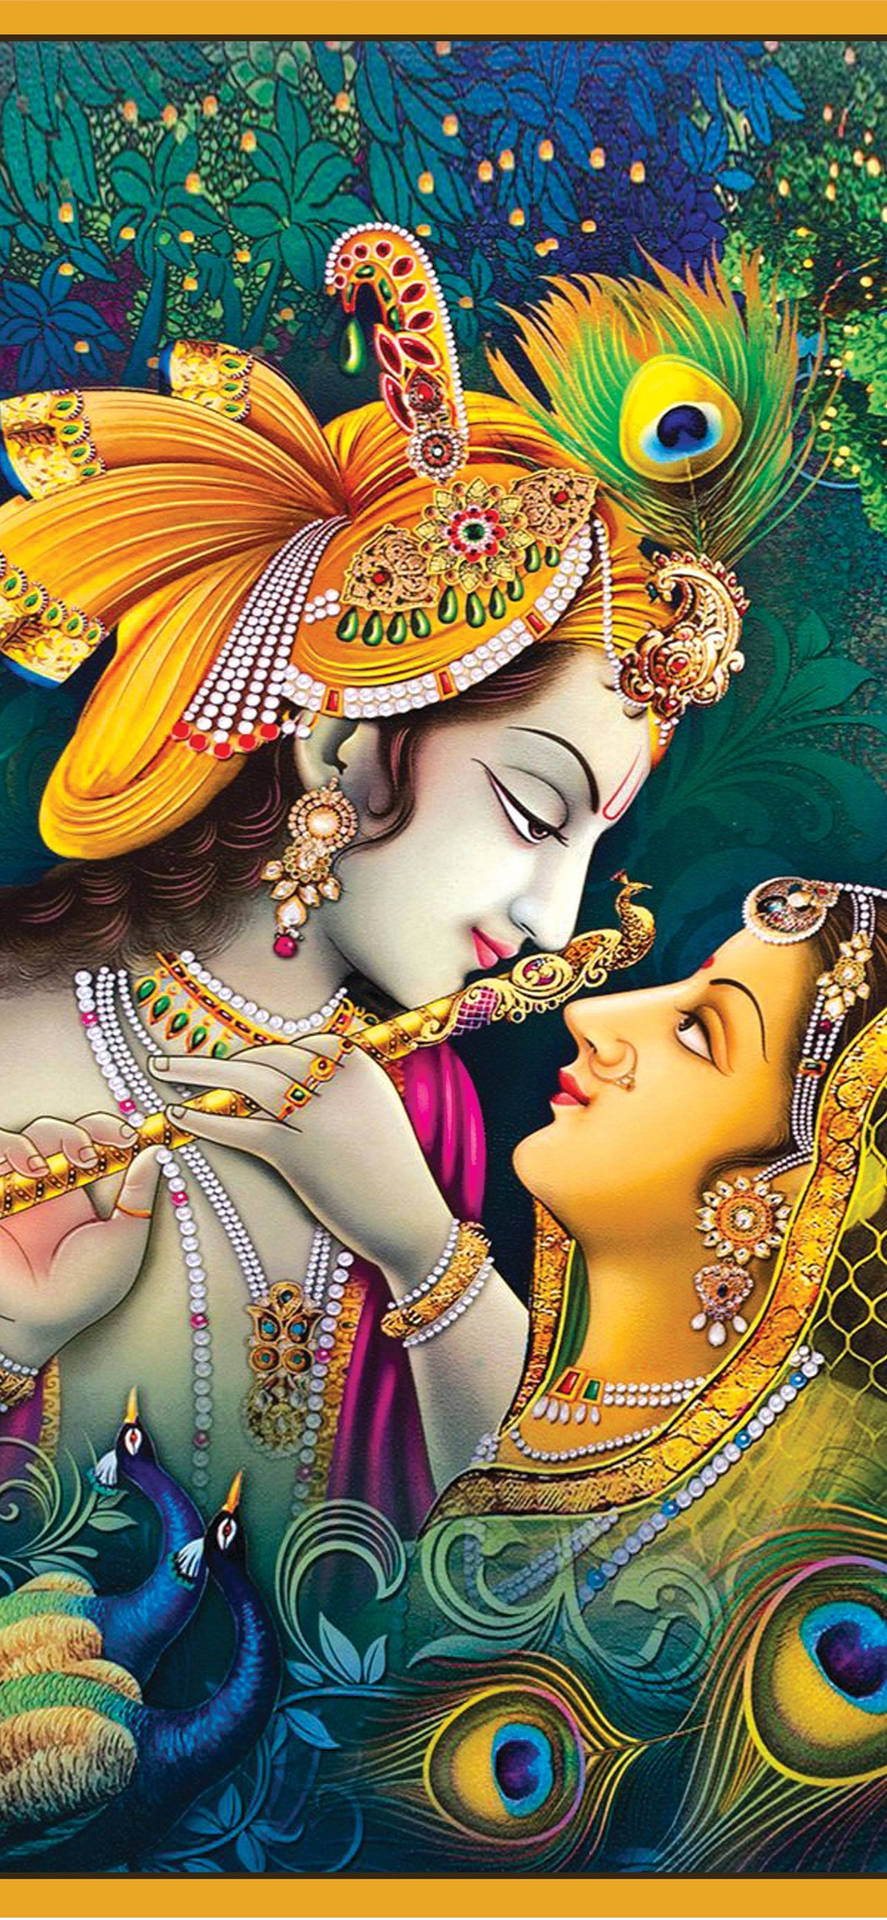 Krishna Bhagwan And Radha Face-to-face